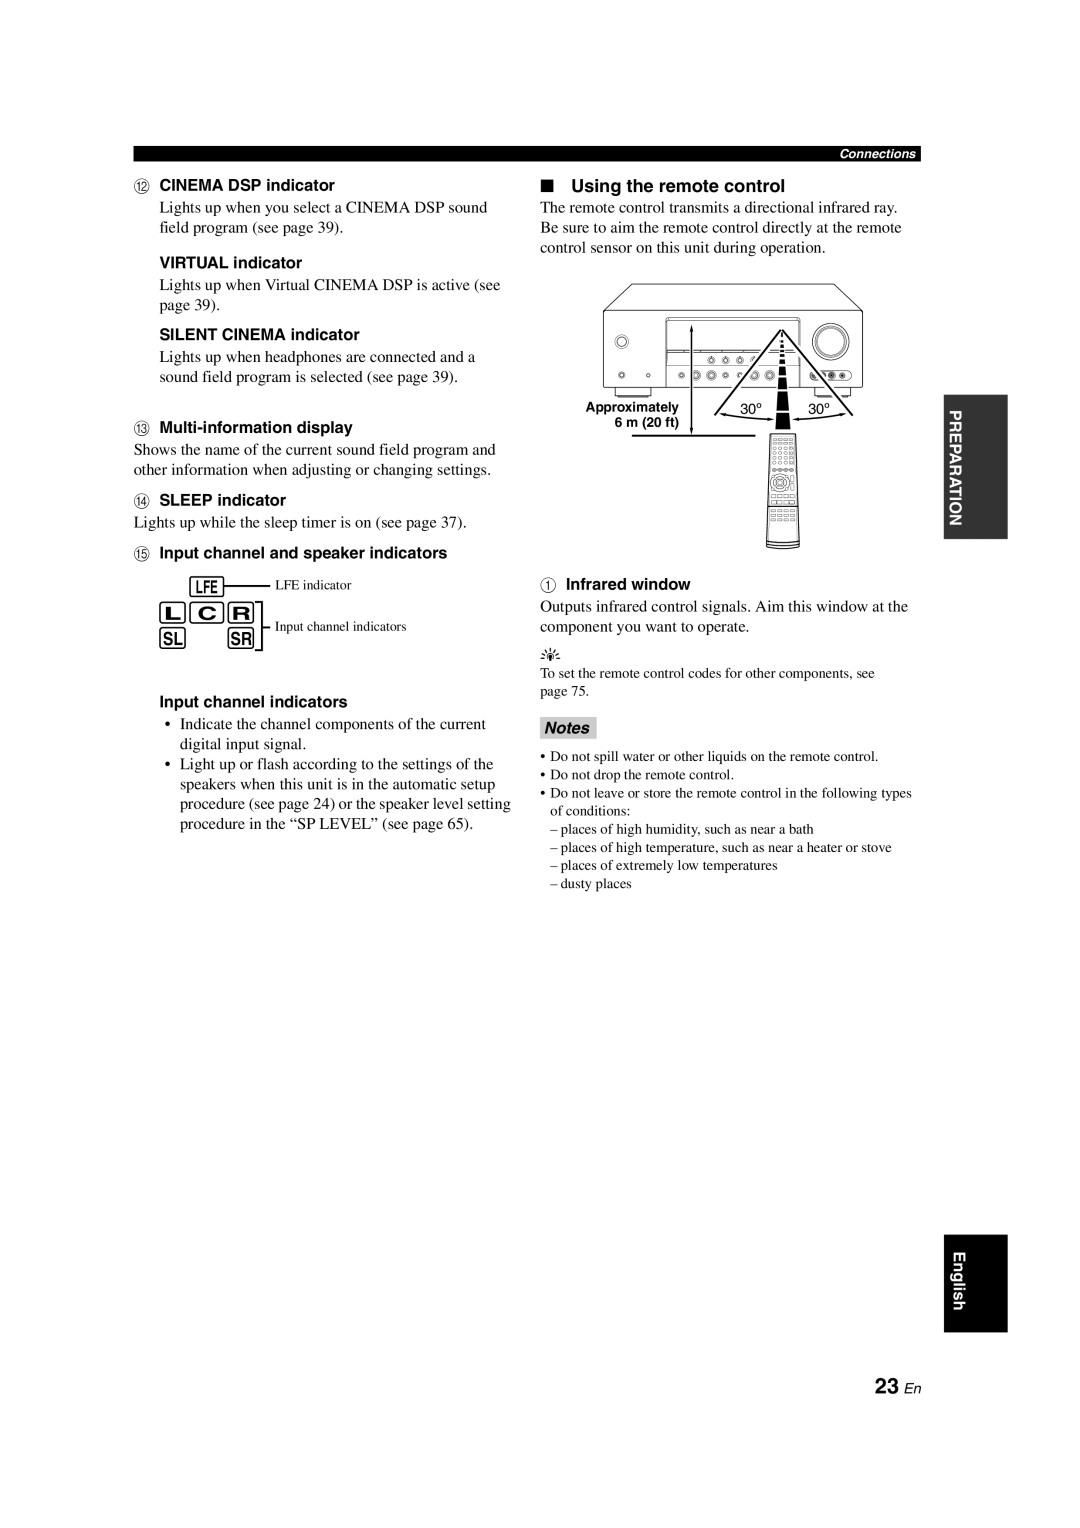 Yamaha HTR-6140 owner manual 23 En, L C R, Sl Sr, Using the remote control, Notes 